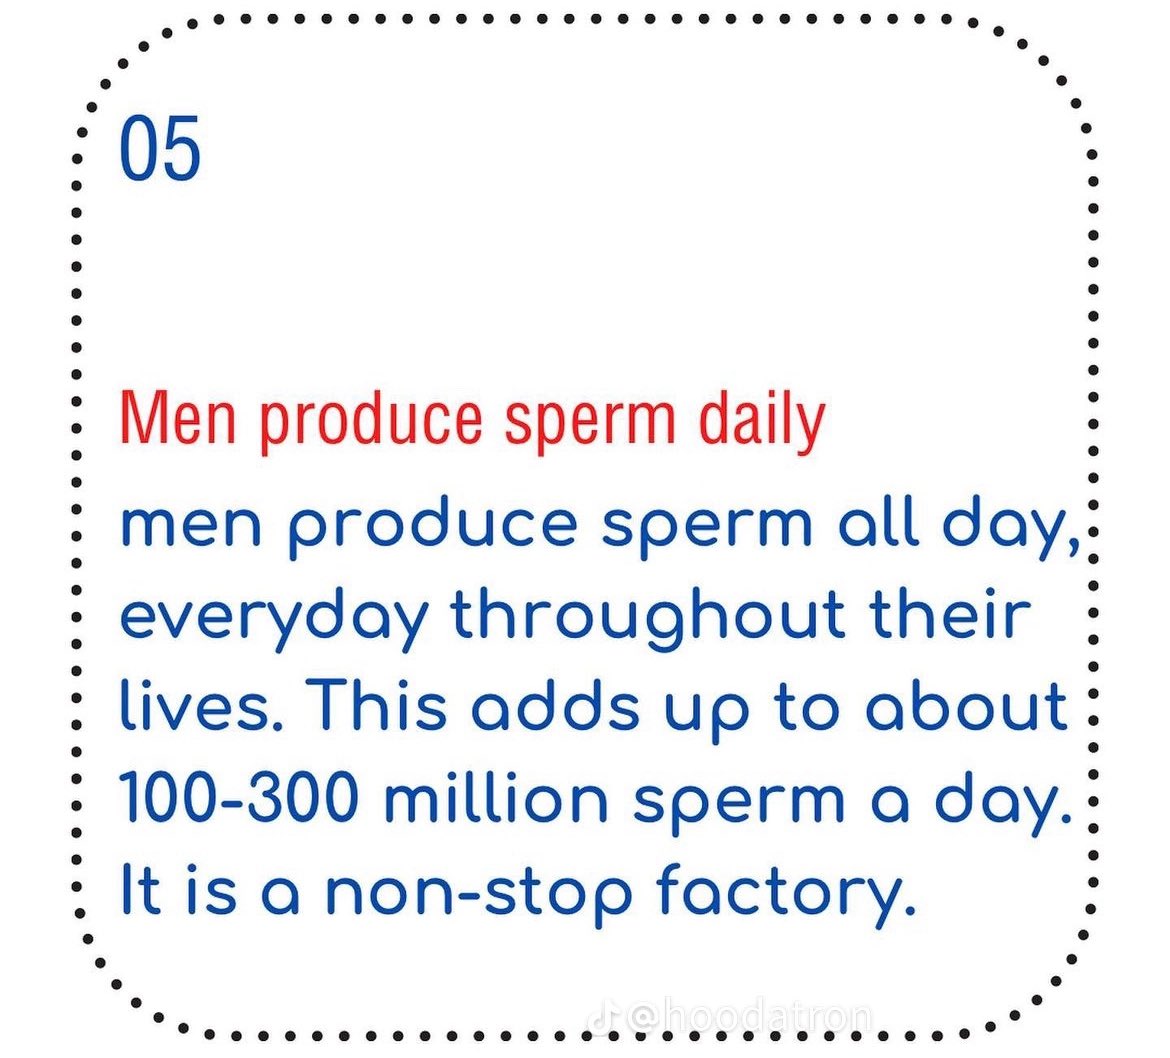 8 facts about semen no. 5